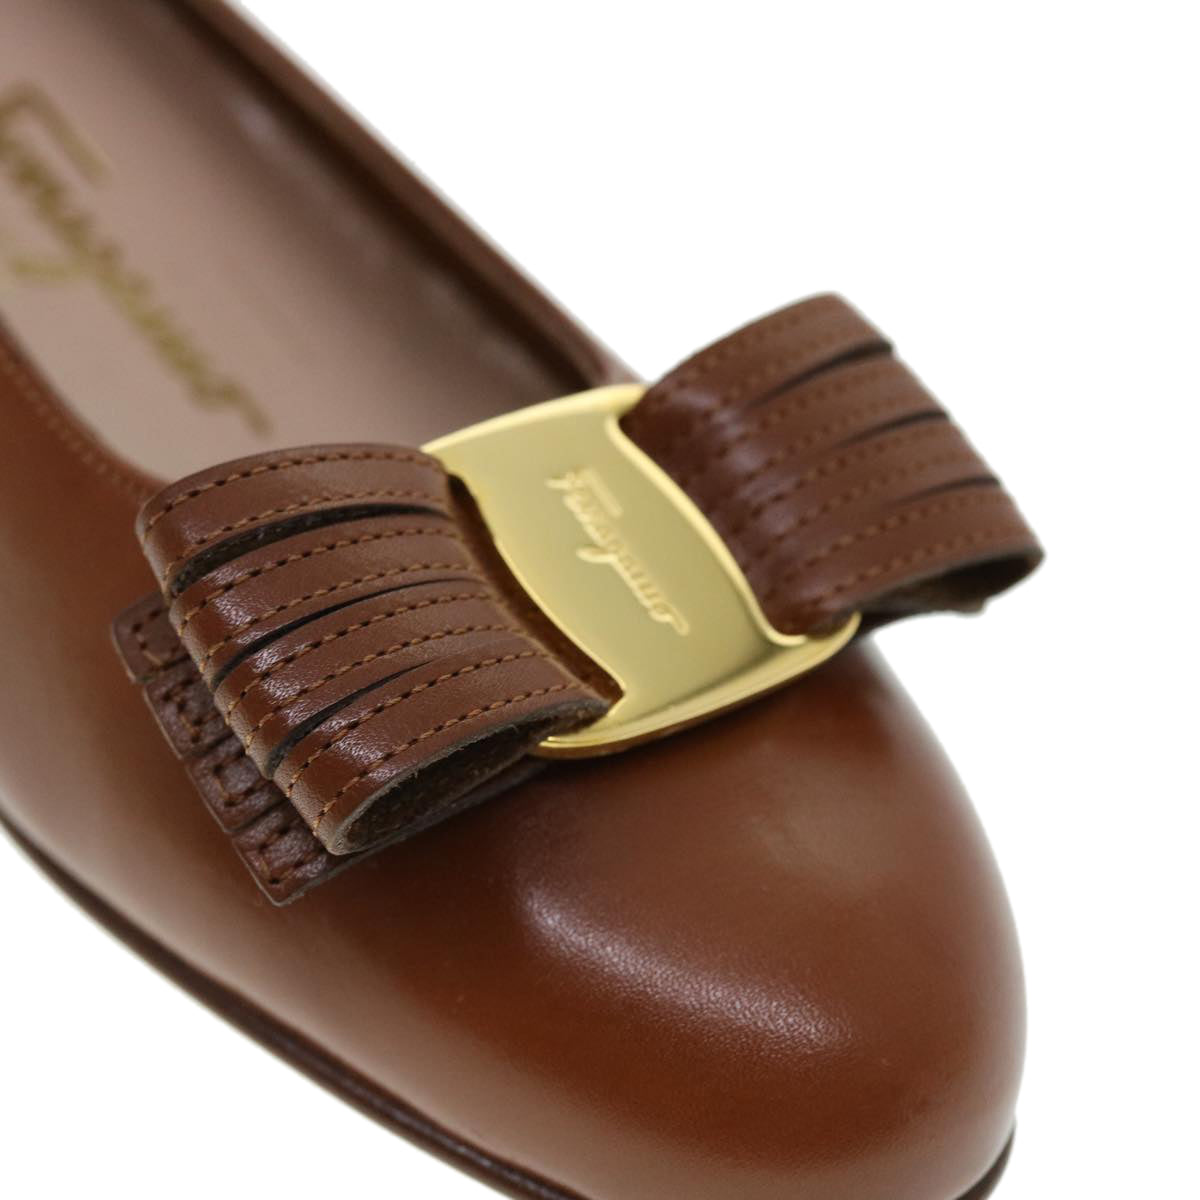 Salvatore Ferragamo shoes Leather Brown Auth 37994